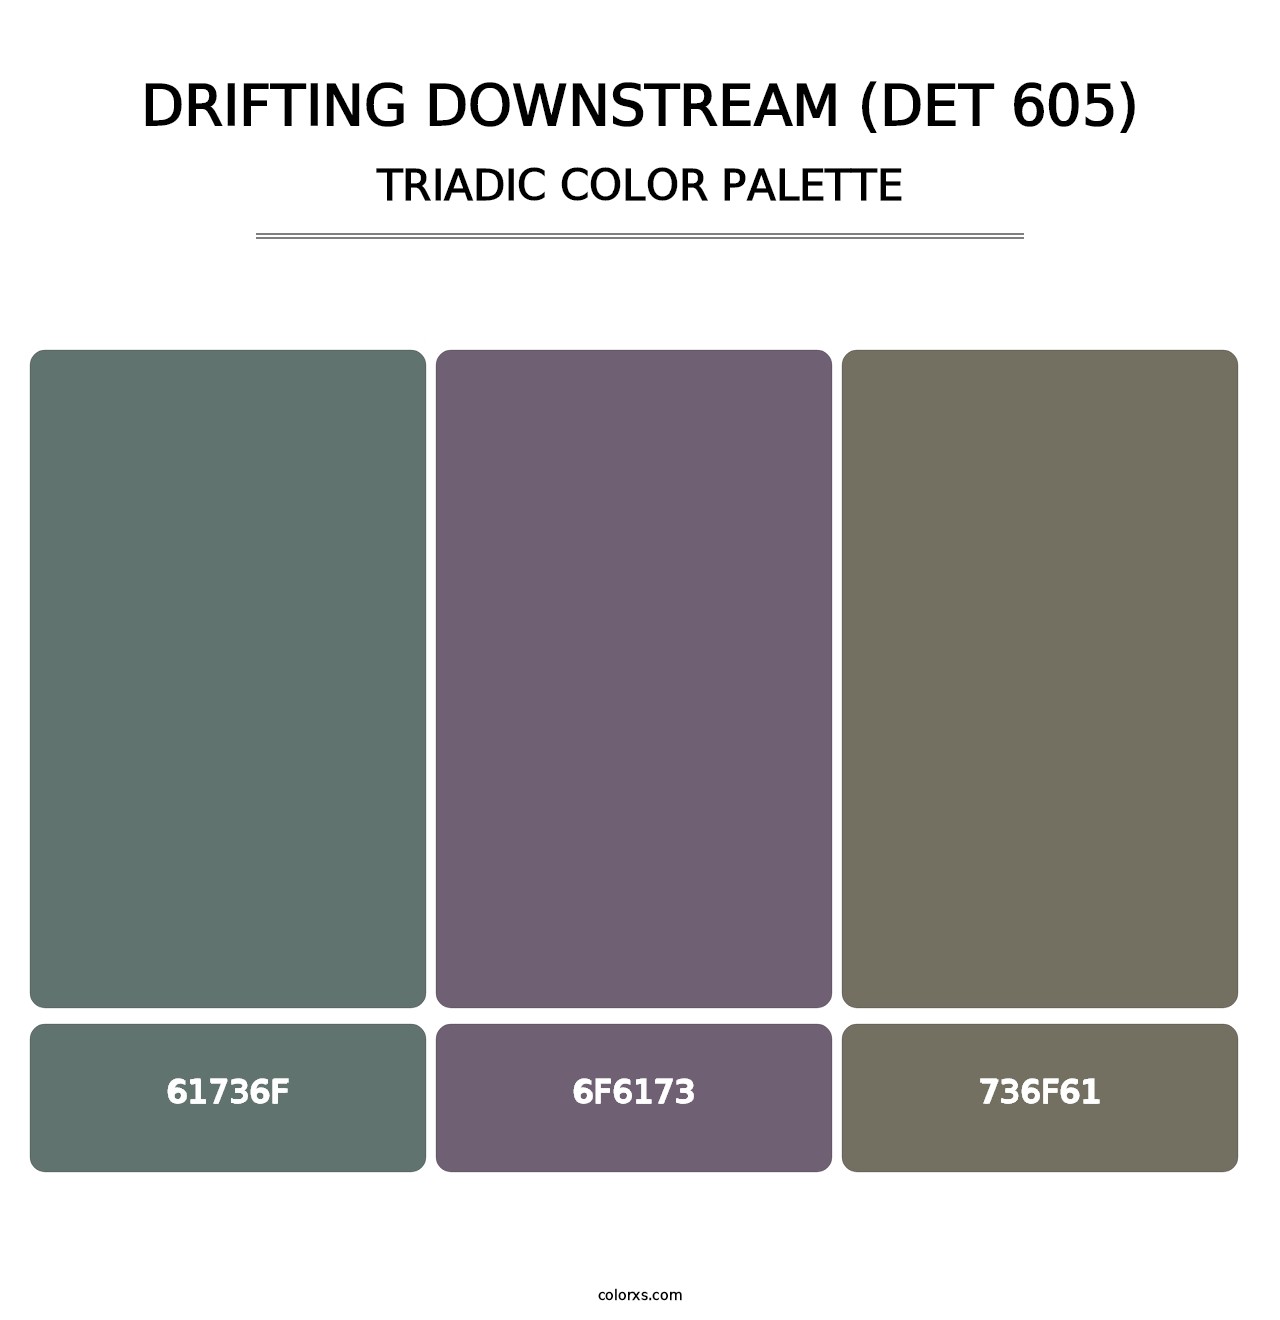 Drifting Downstream (DET 605) - Triadic Color Palette